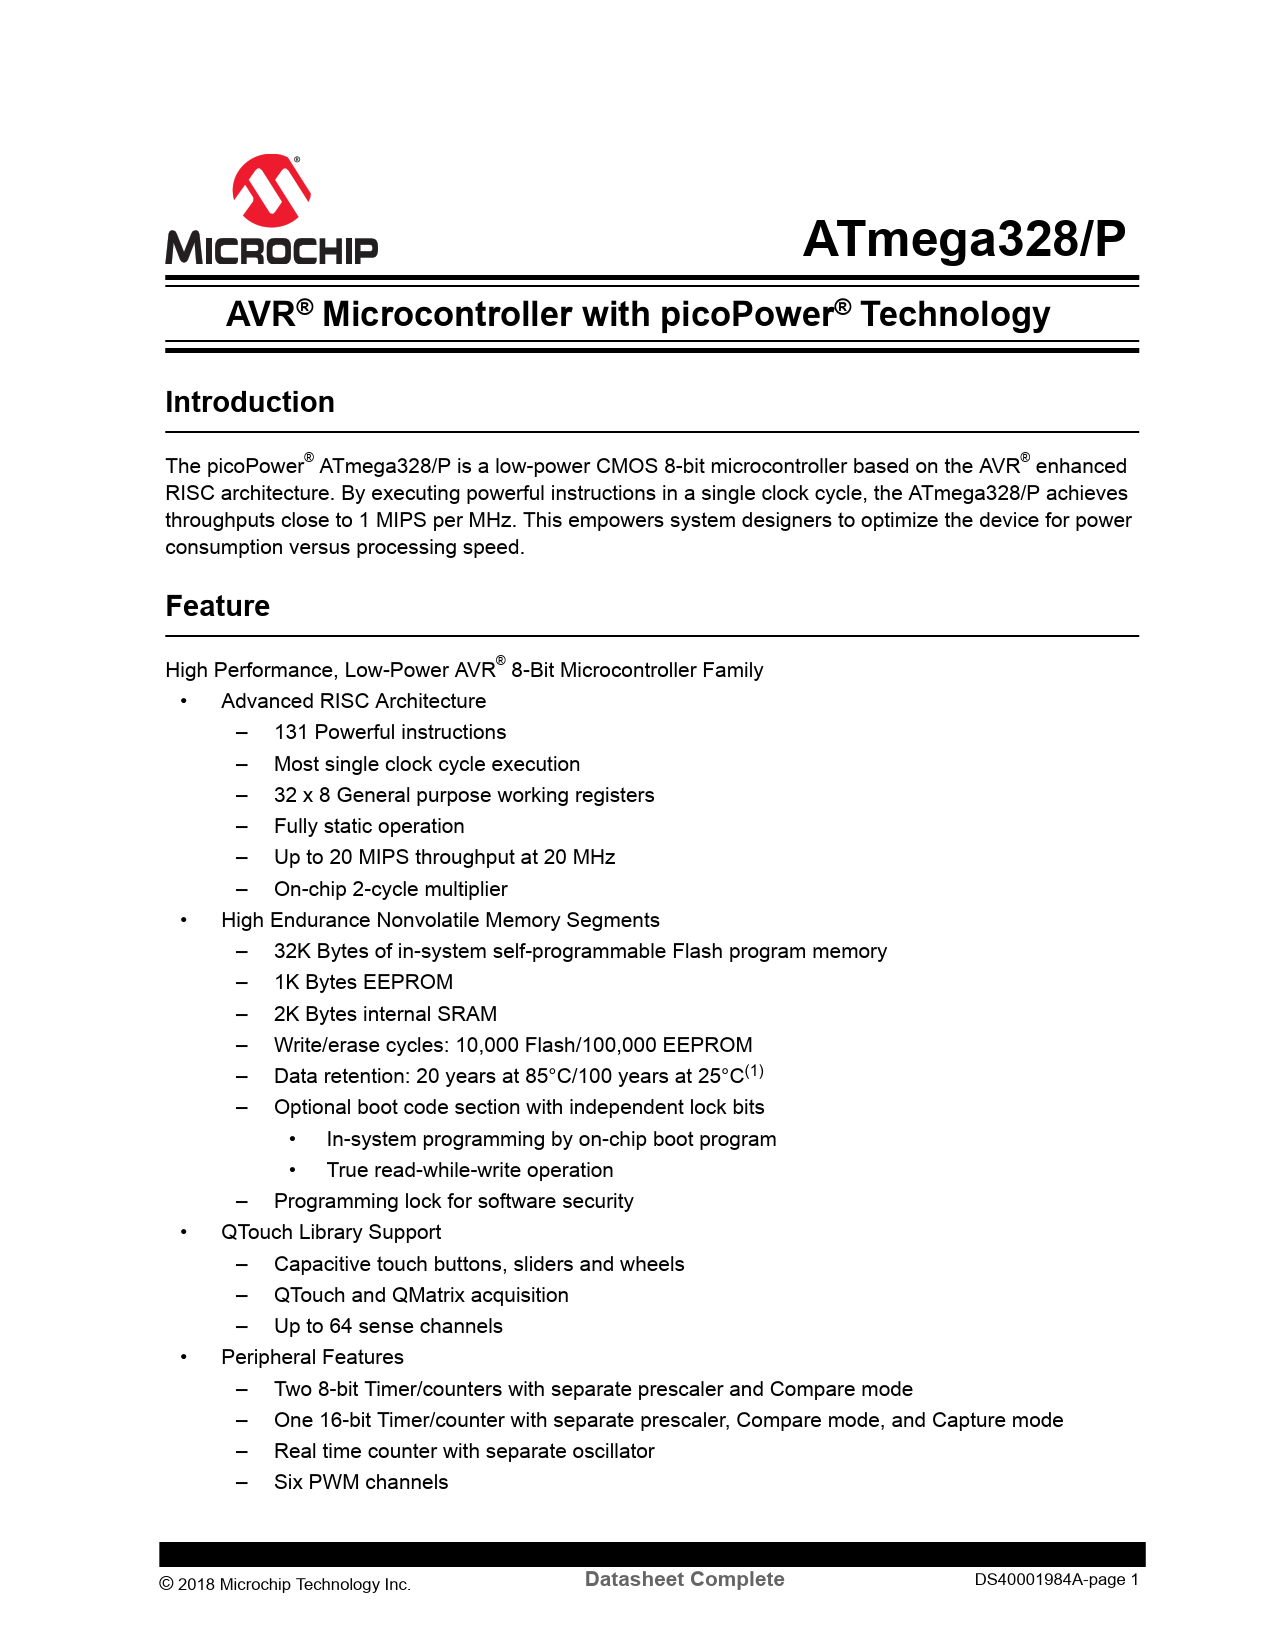 DataSheet ATmega328/P Atmel - Preview and Download